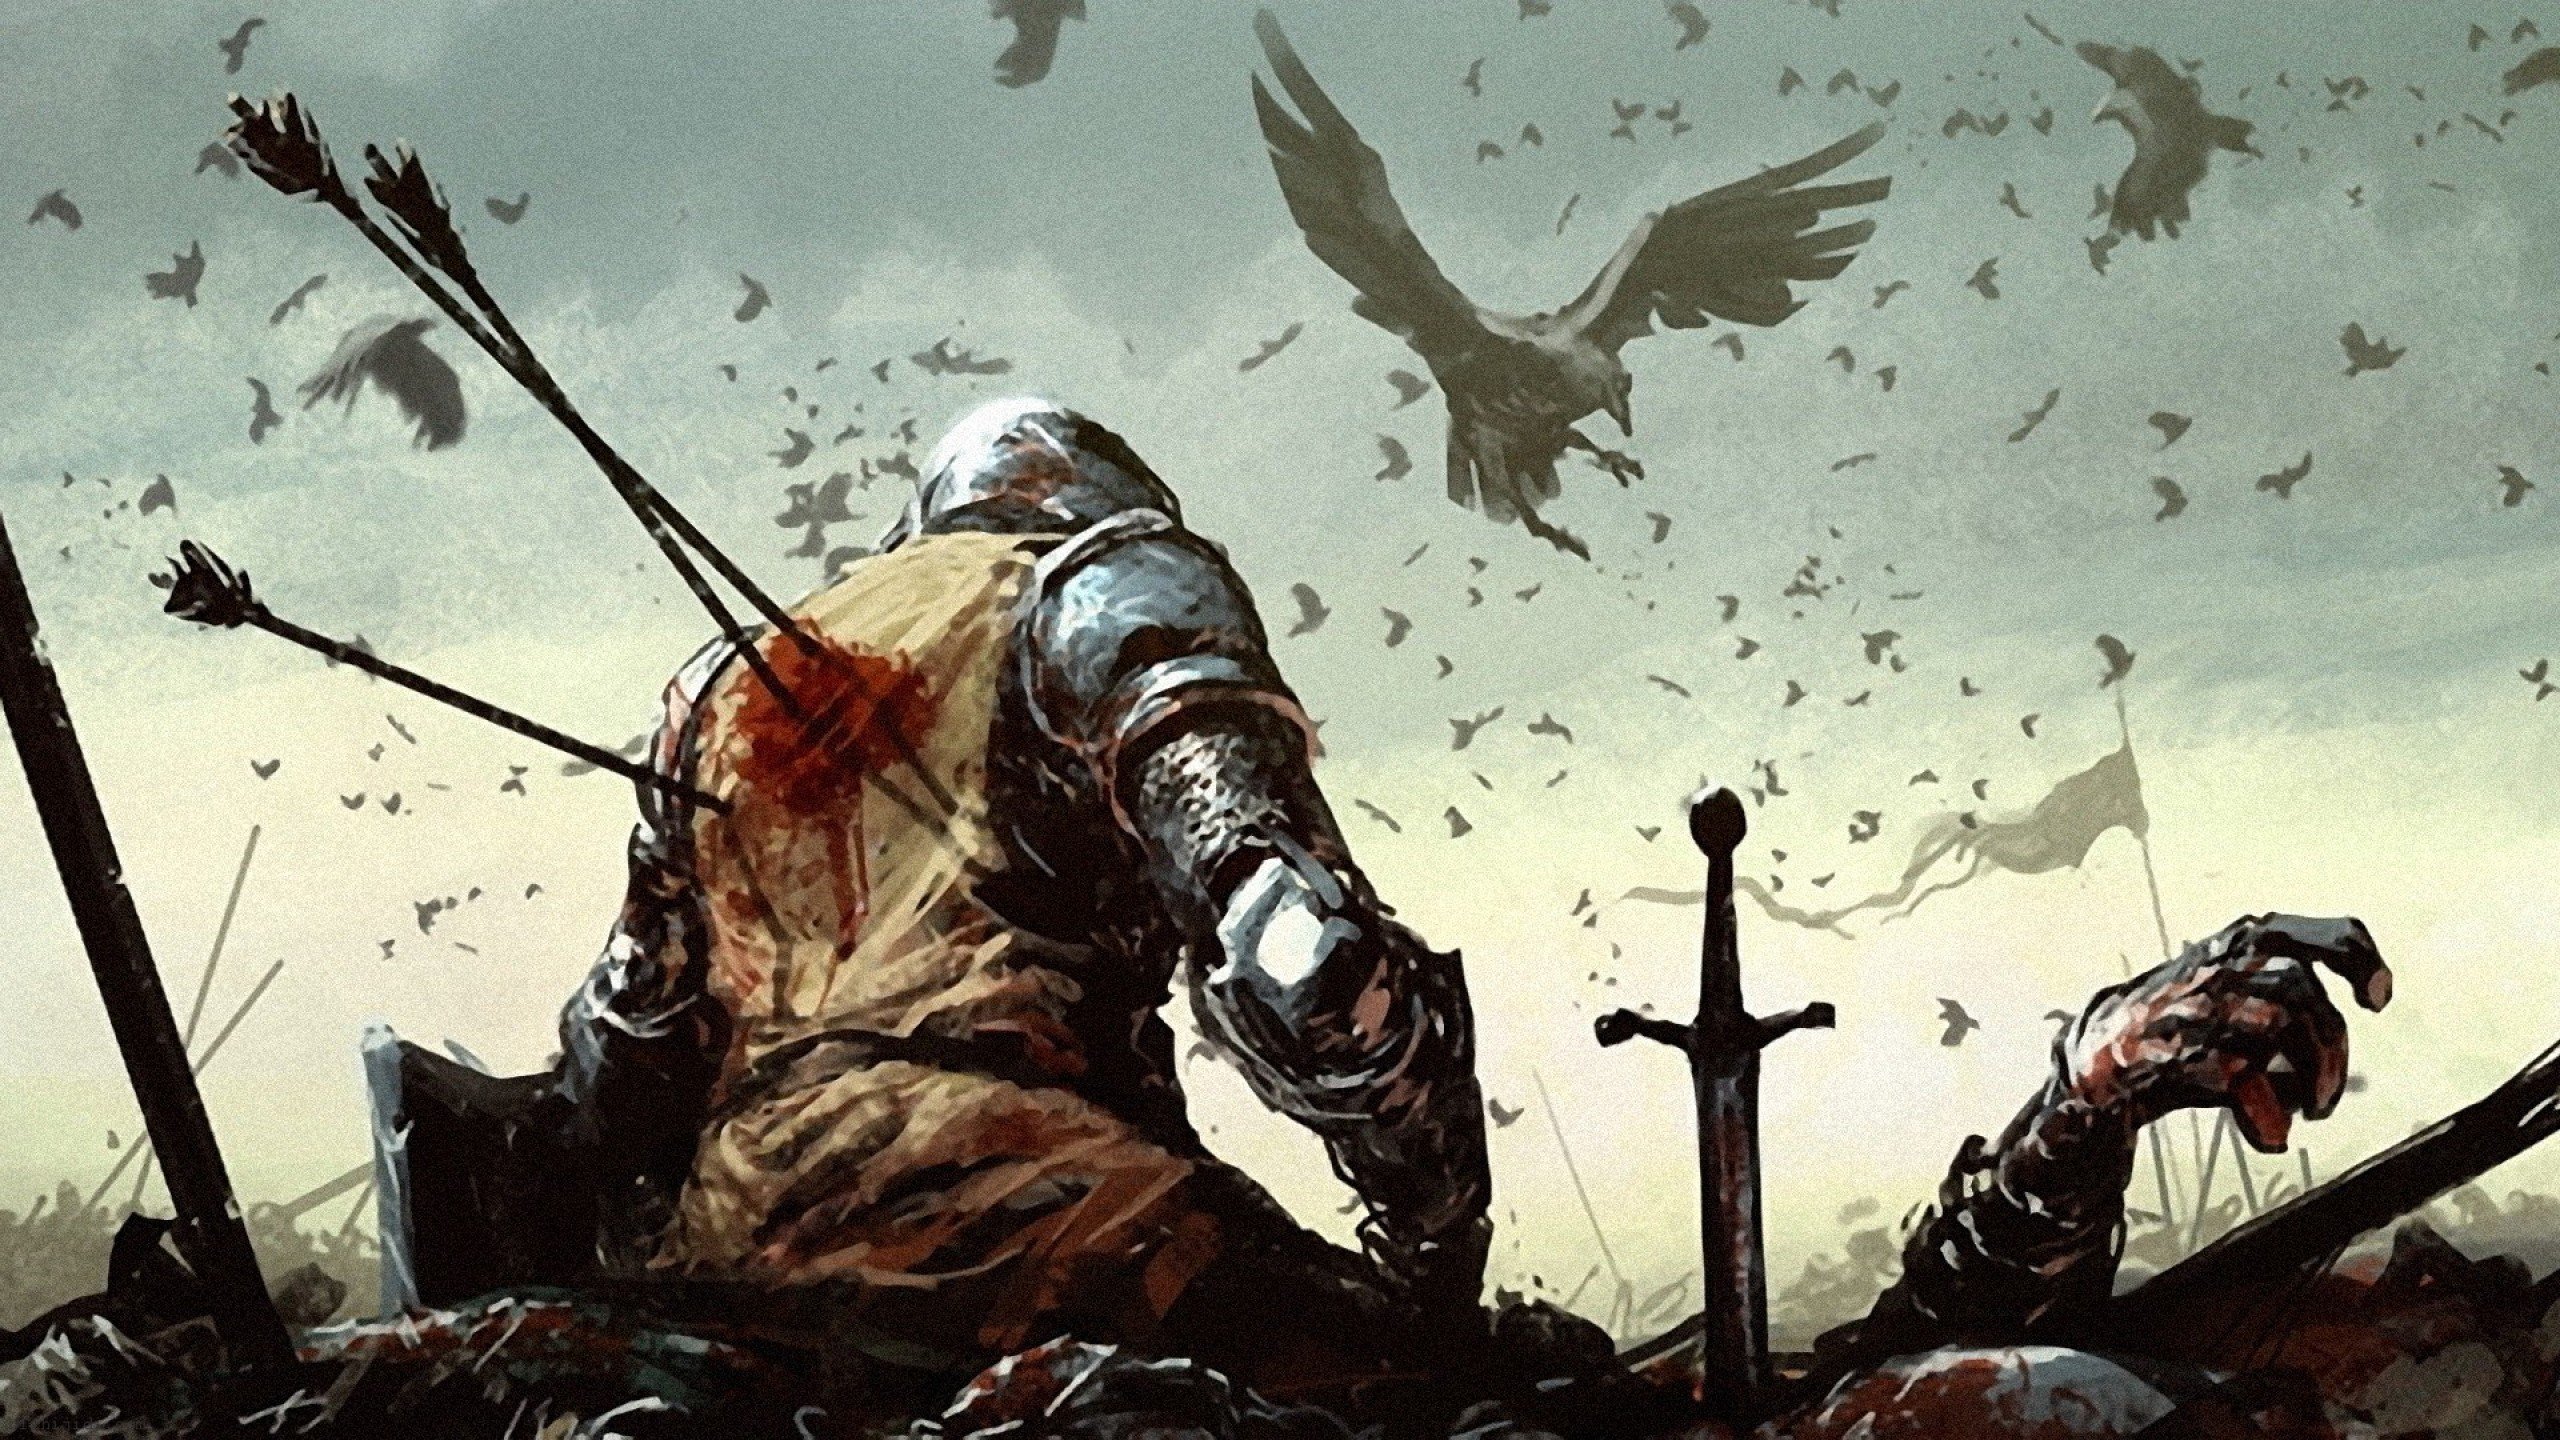 Wallpaper, birds, soldier, blood, warrior, Dark Souls, medieval, battlefields, arrows, screenshot 2560x1440